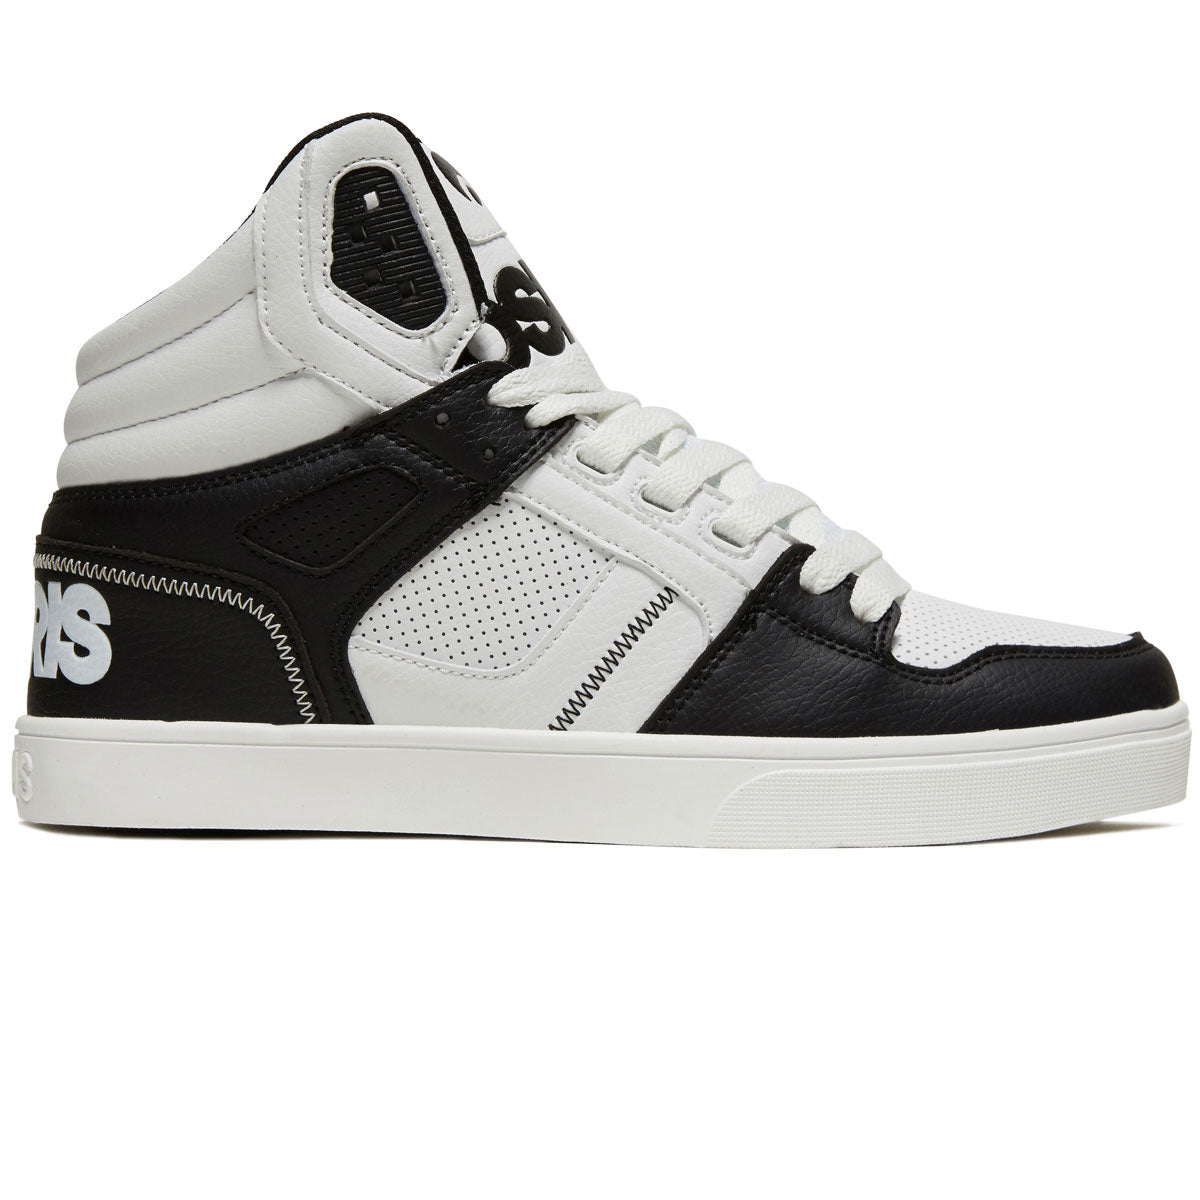 Osiris Clone Shoes - Black/White/Black image 1